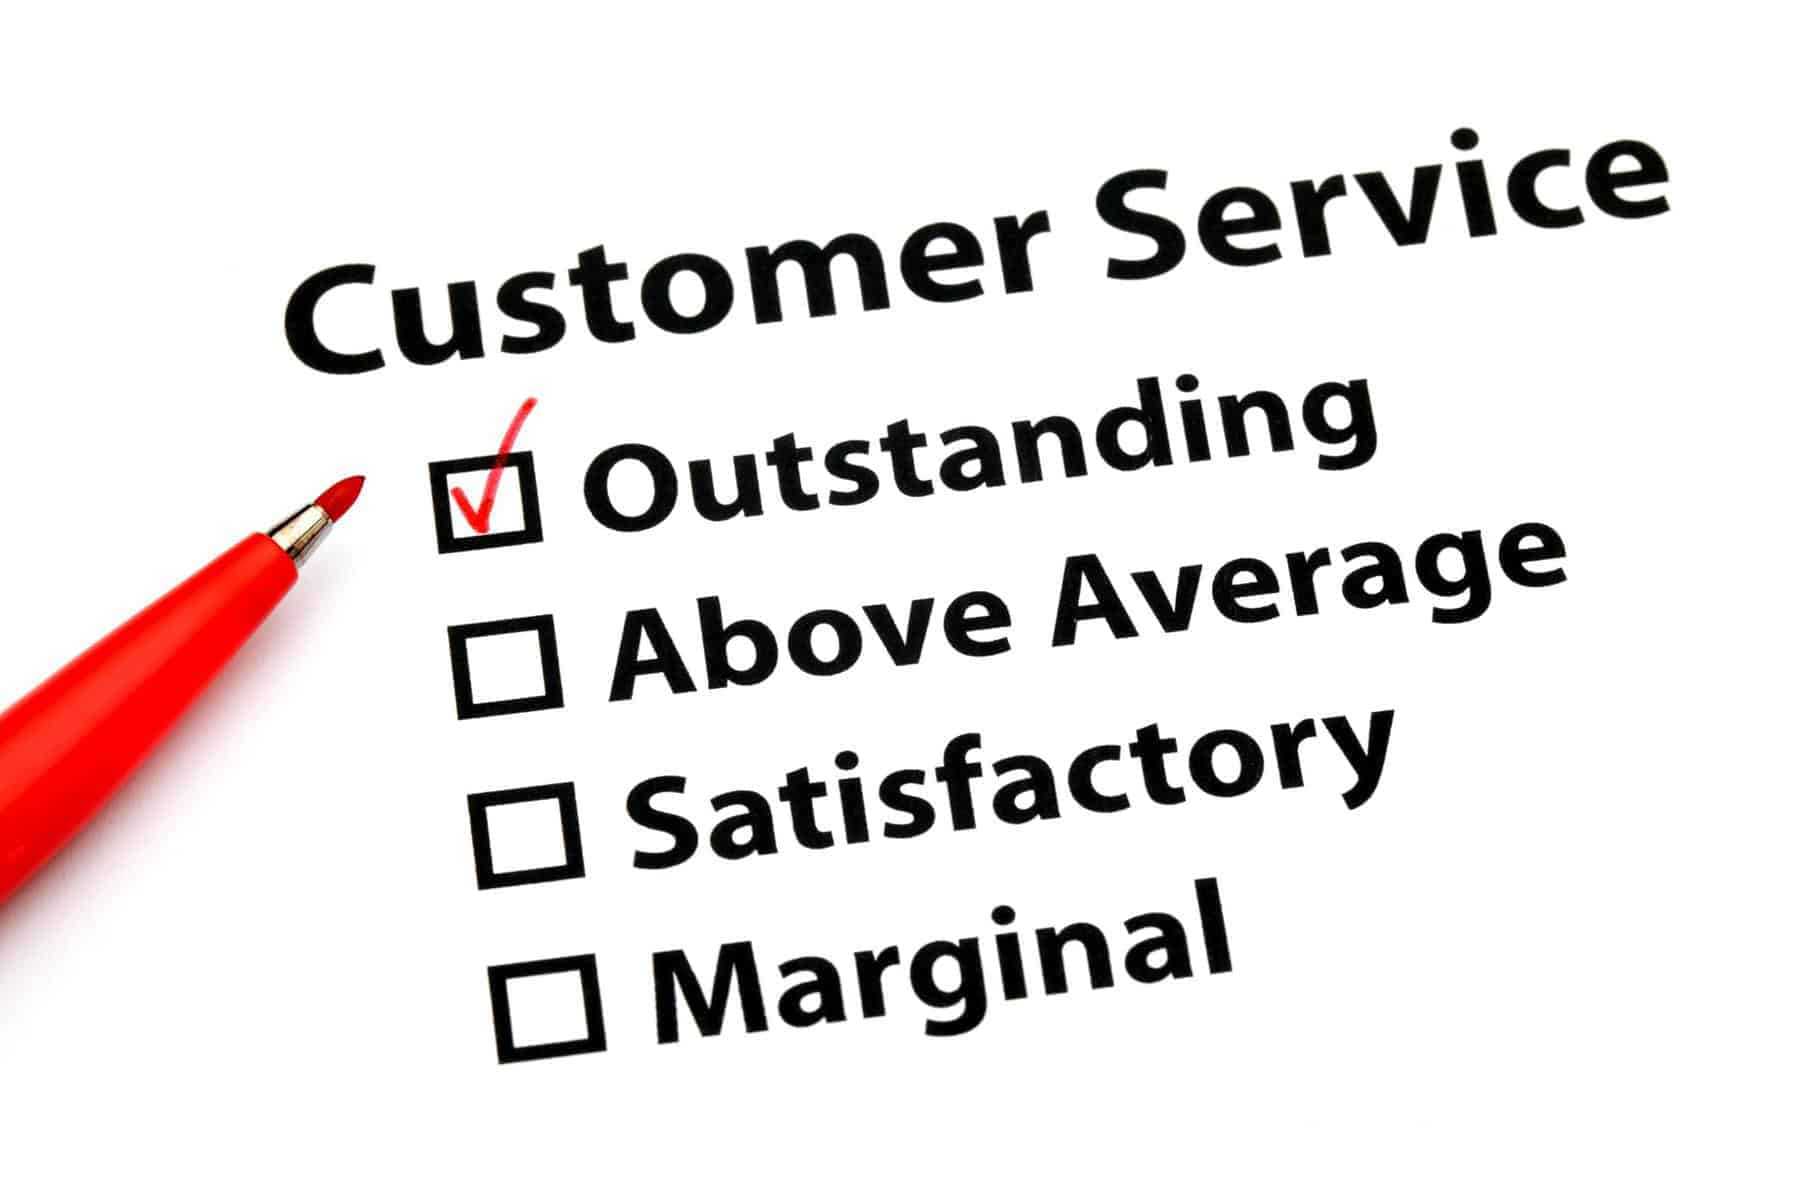 5 Steps to Creating a Killer Customer Survey